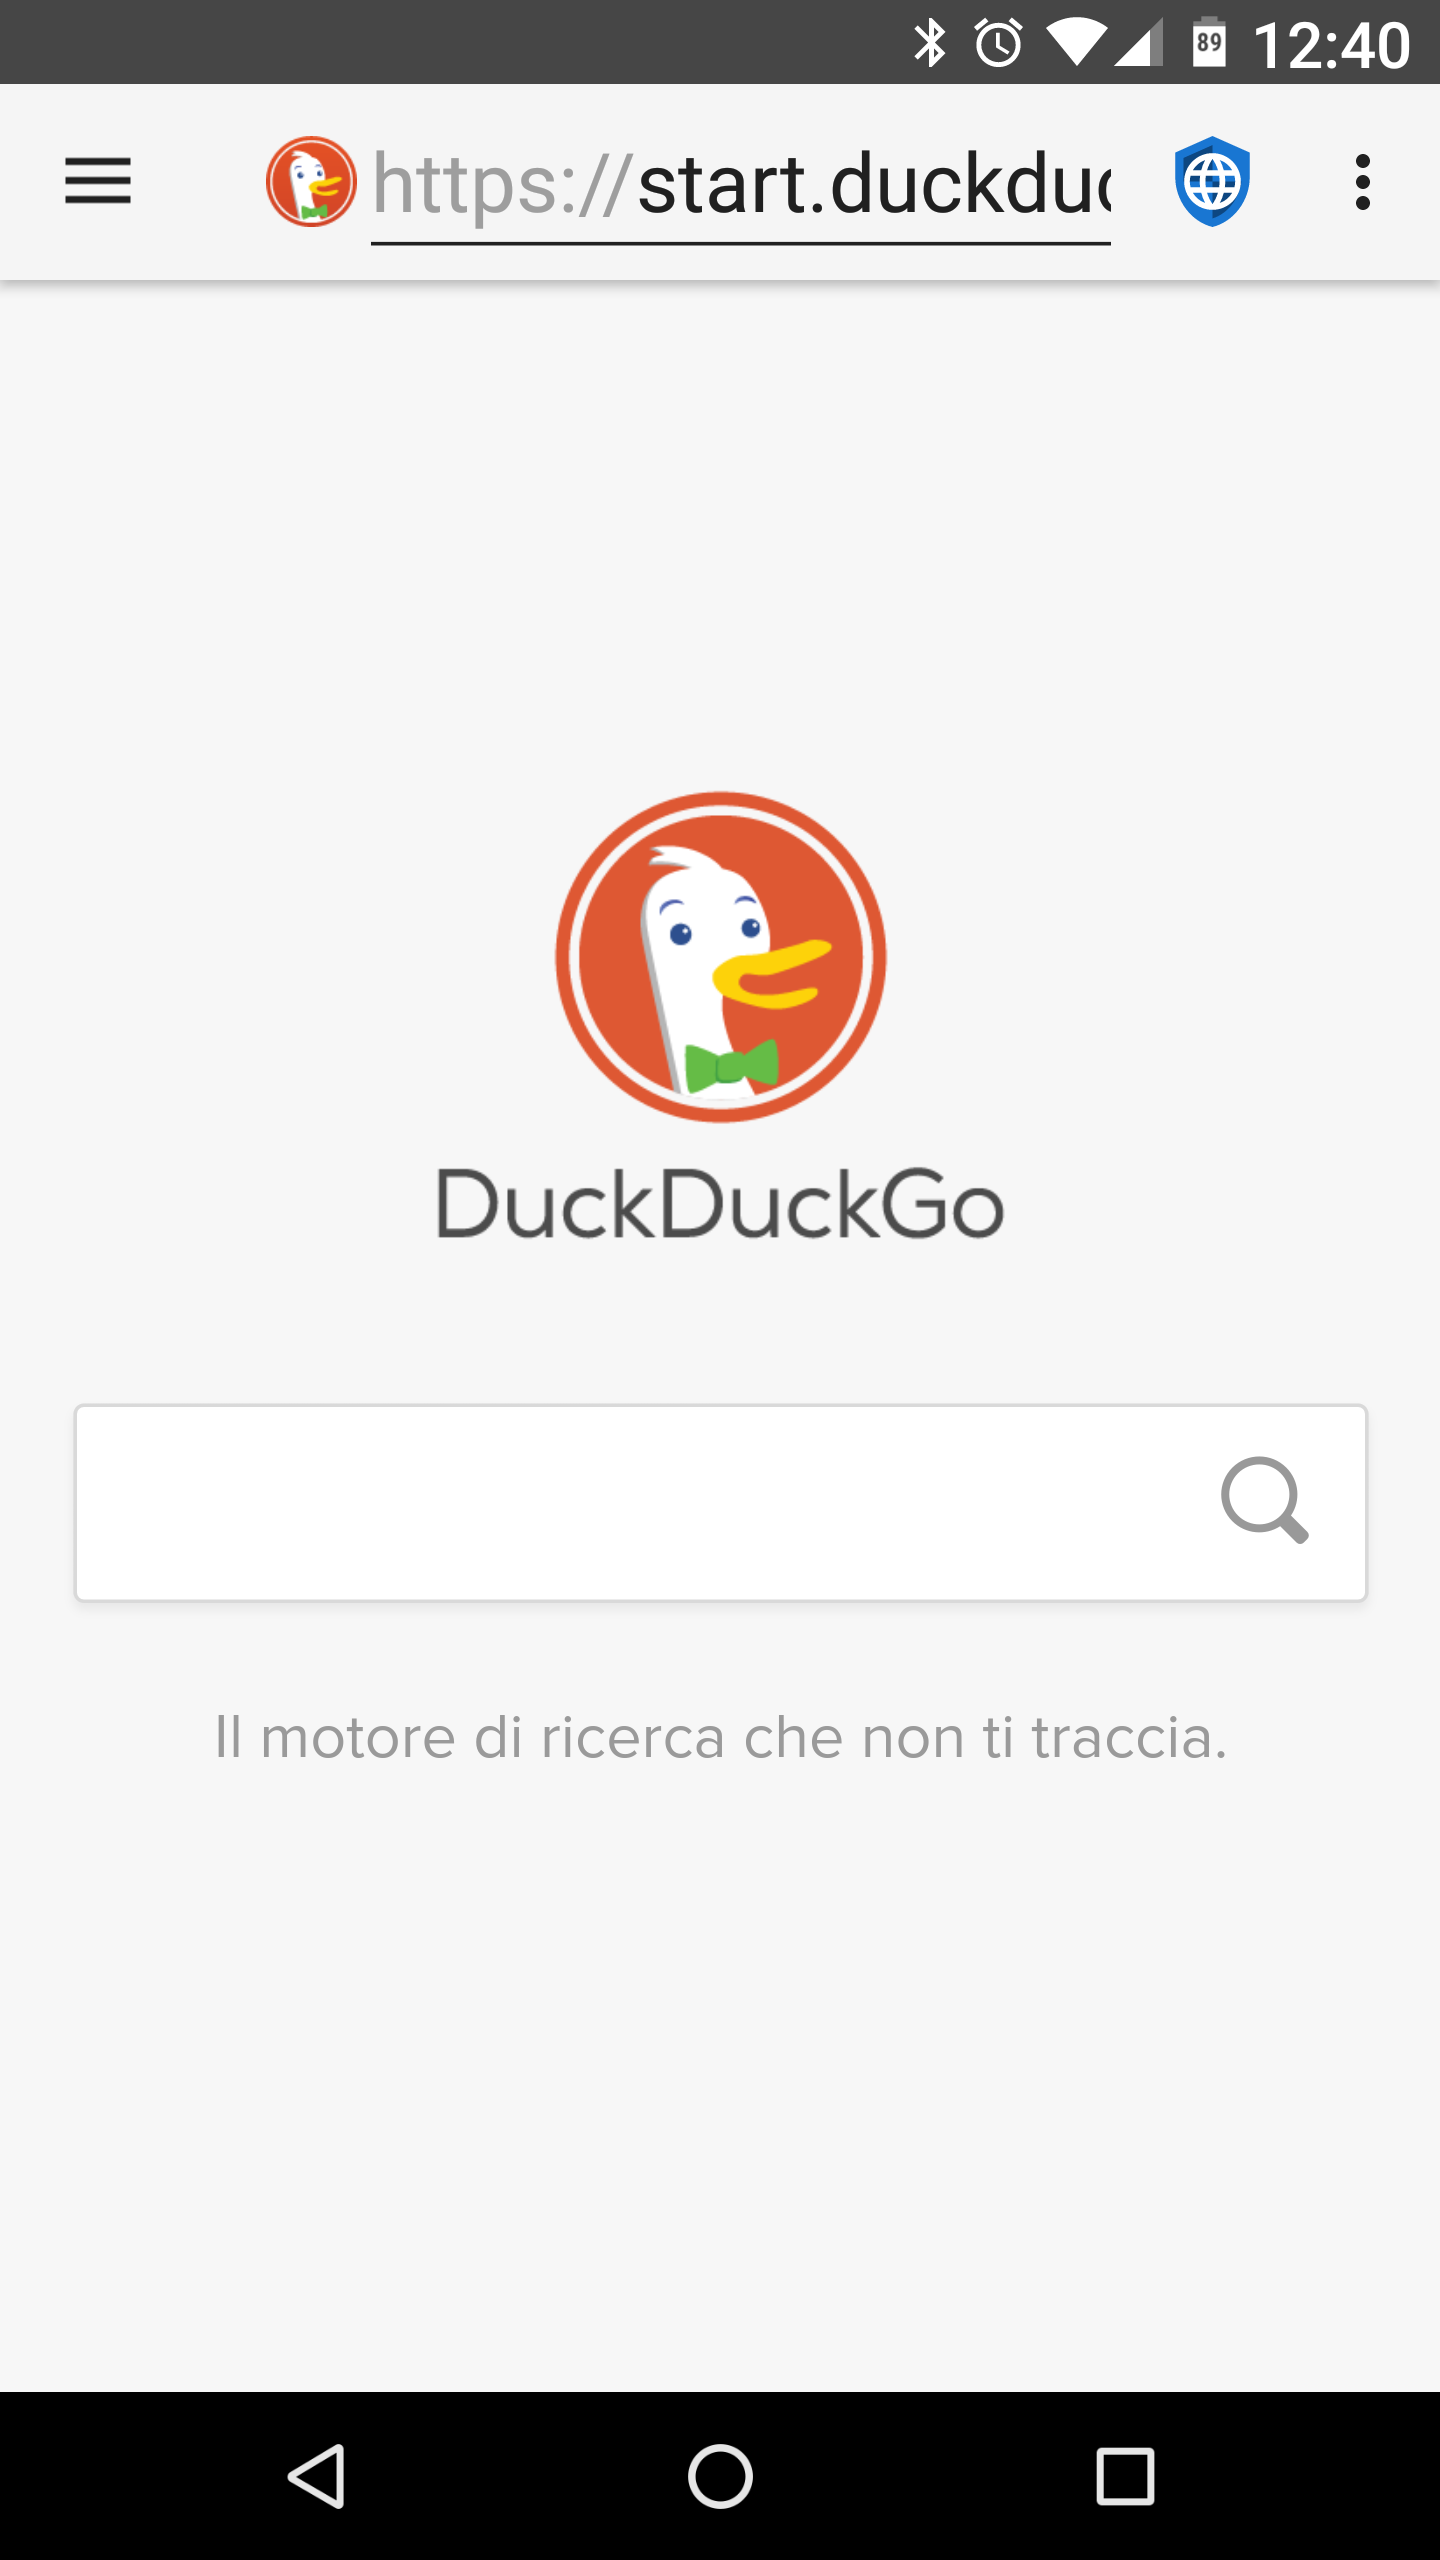 fastlane/metadata/android/it/phoneScreenshots/01 - DuckDuckGo - it.png